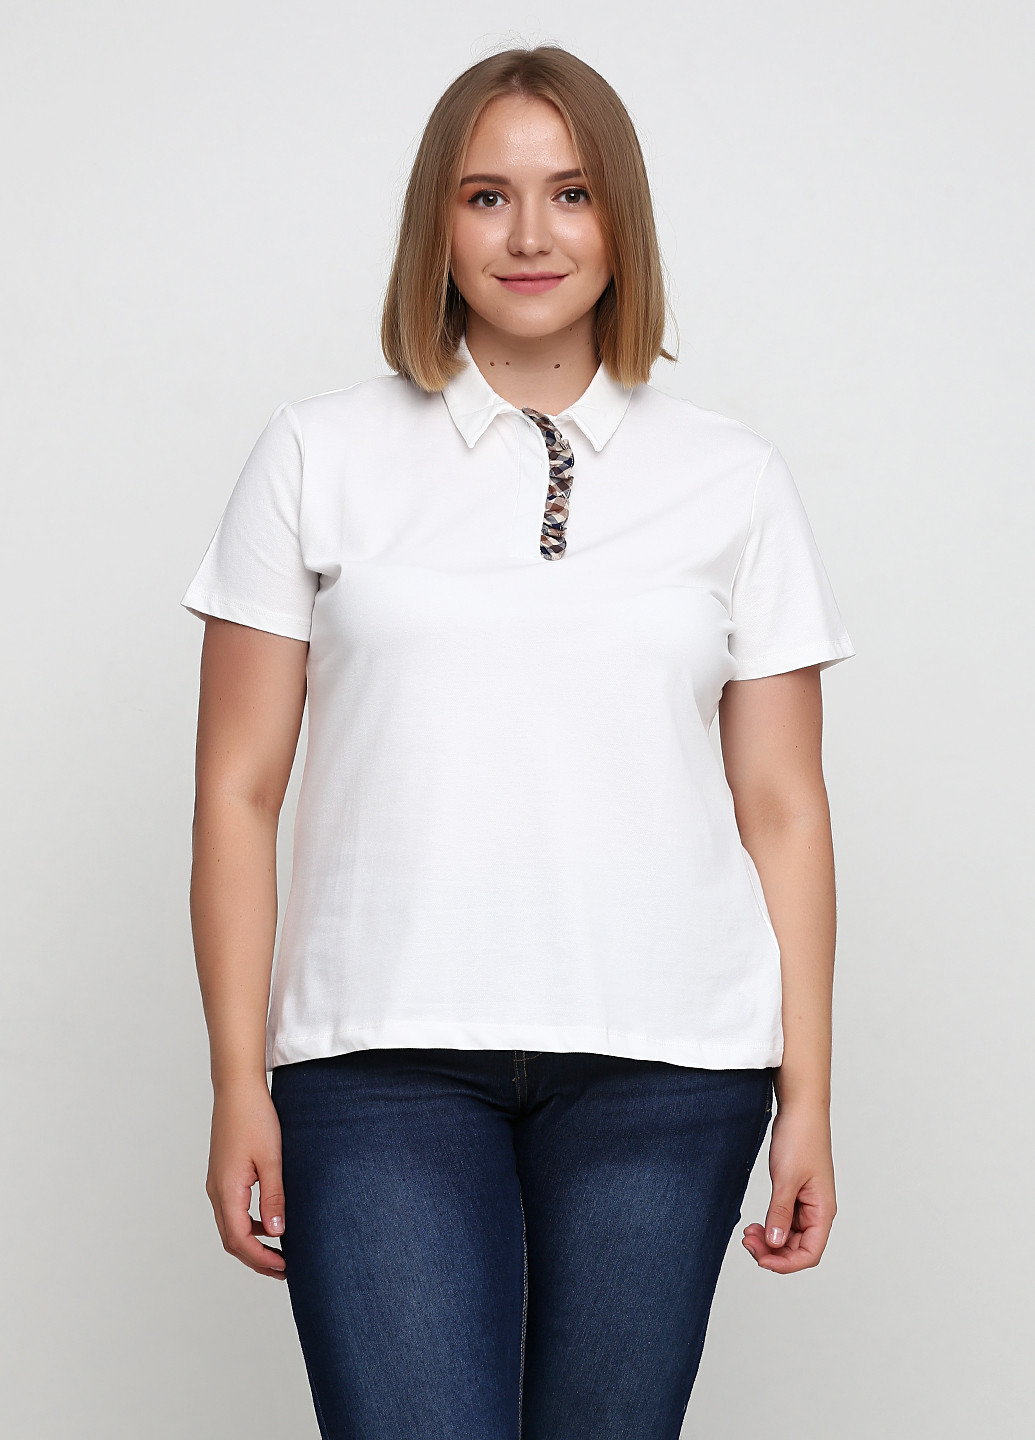 Молочная женская футболка-футболка Aguascutum однотонная